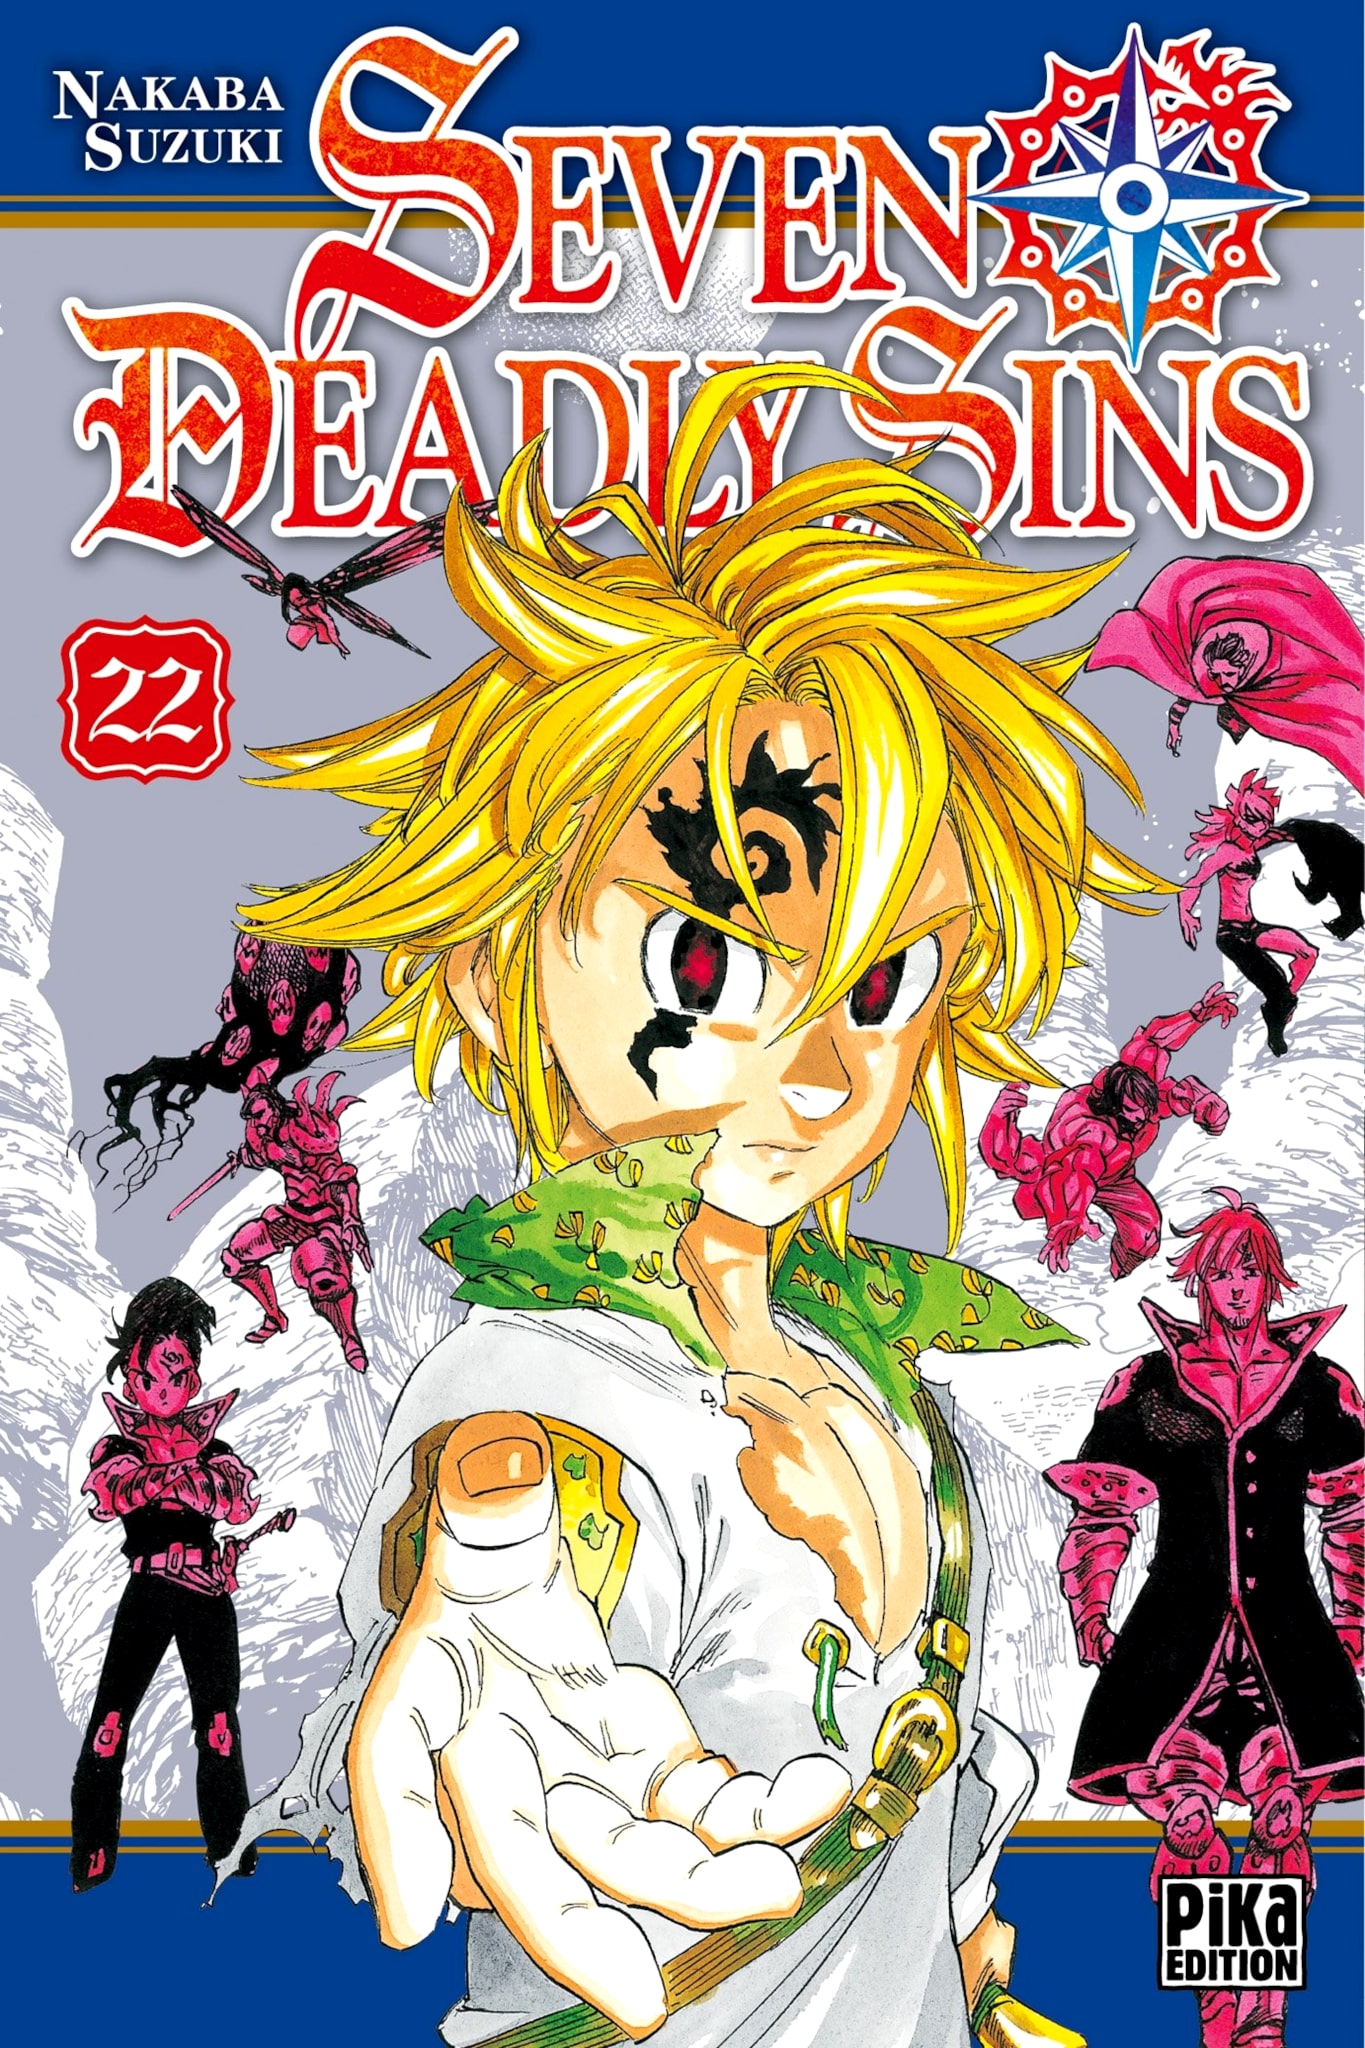 Tome 22 du manga The Seven Deadly Sins